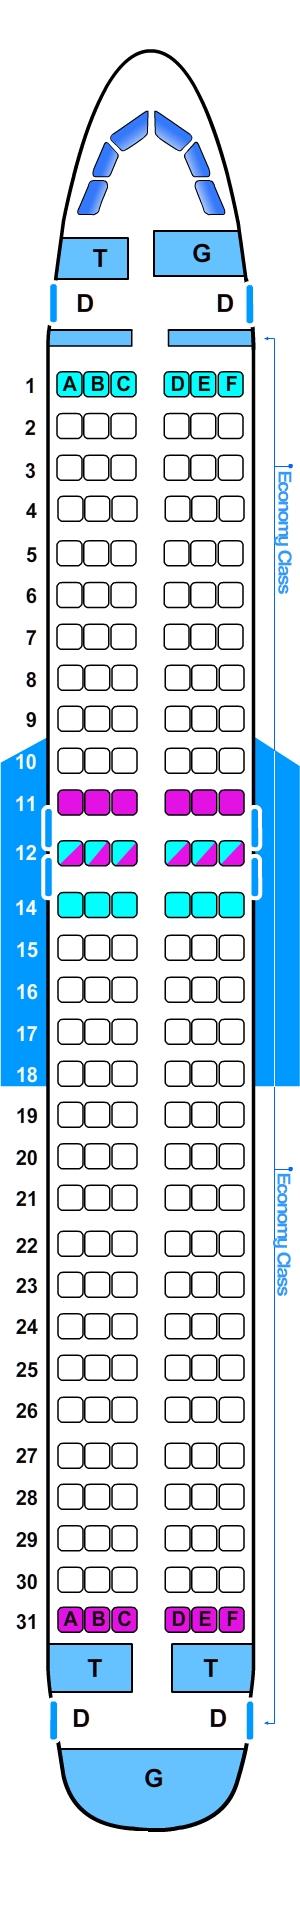 Seat Map Airbus A320 | SeatMaestro